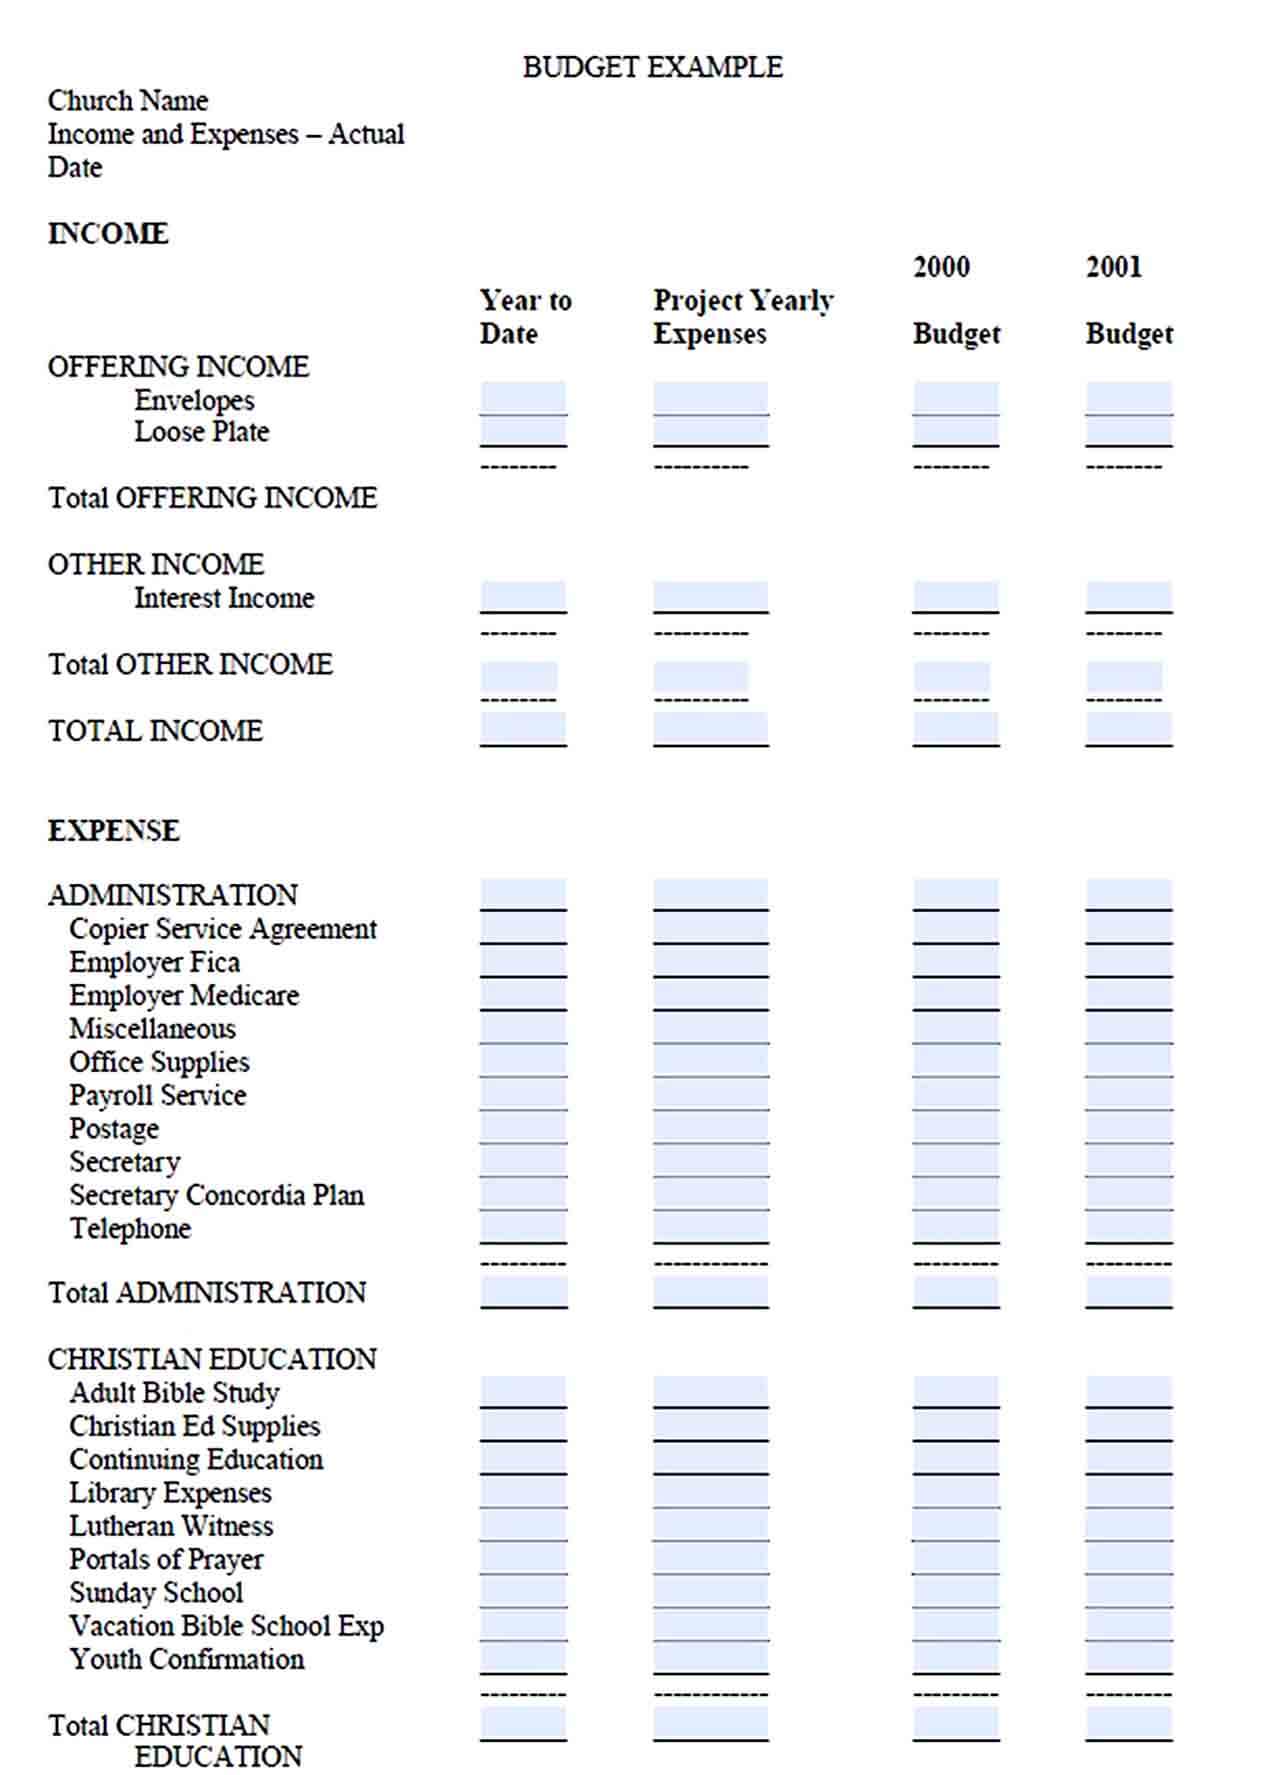 Sample Church Budget Template Download PDF